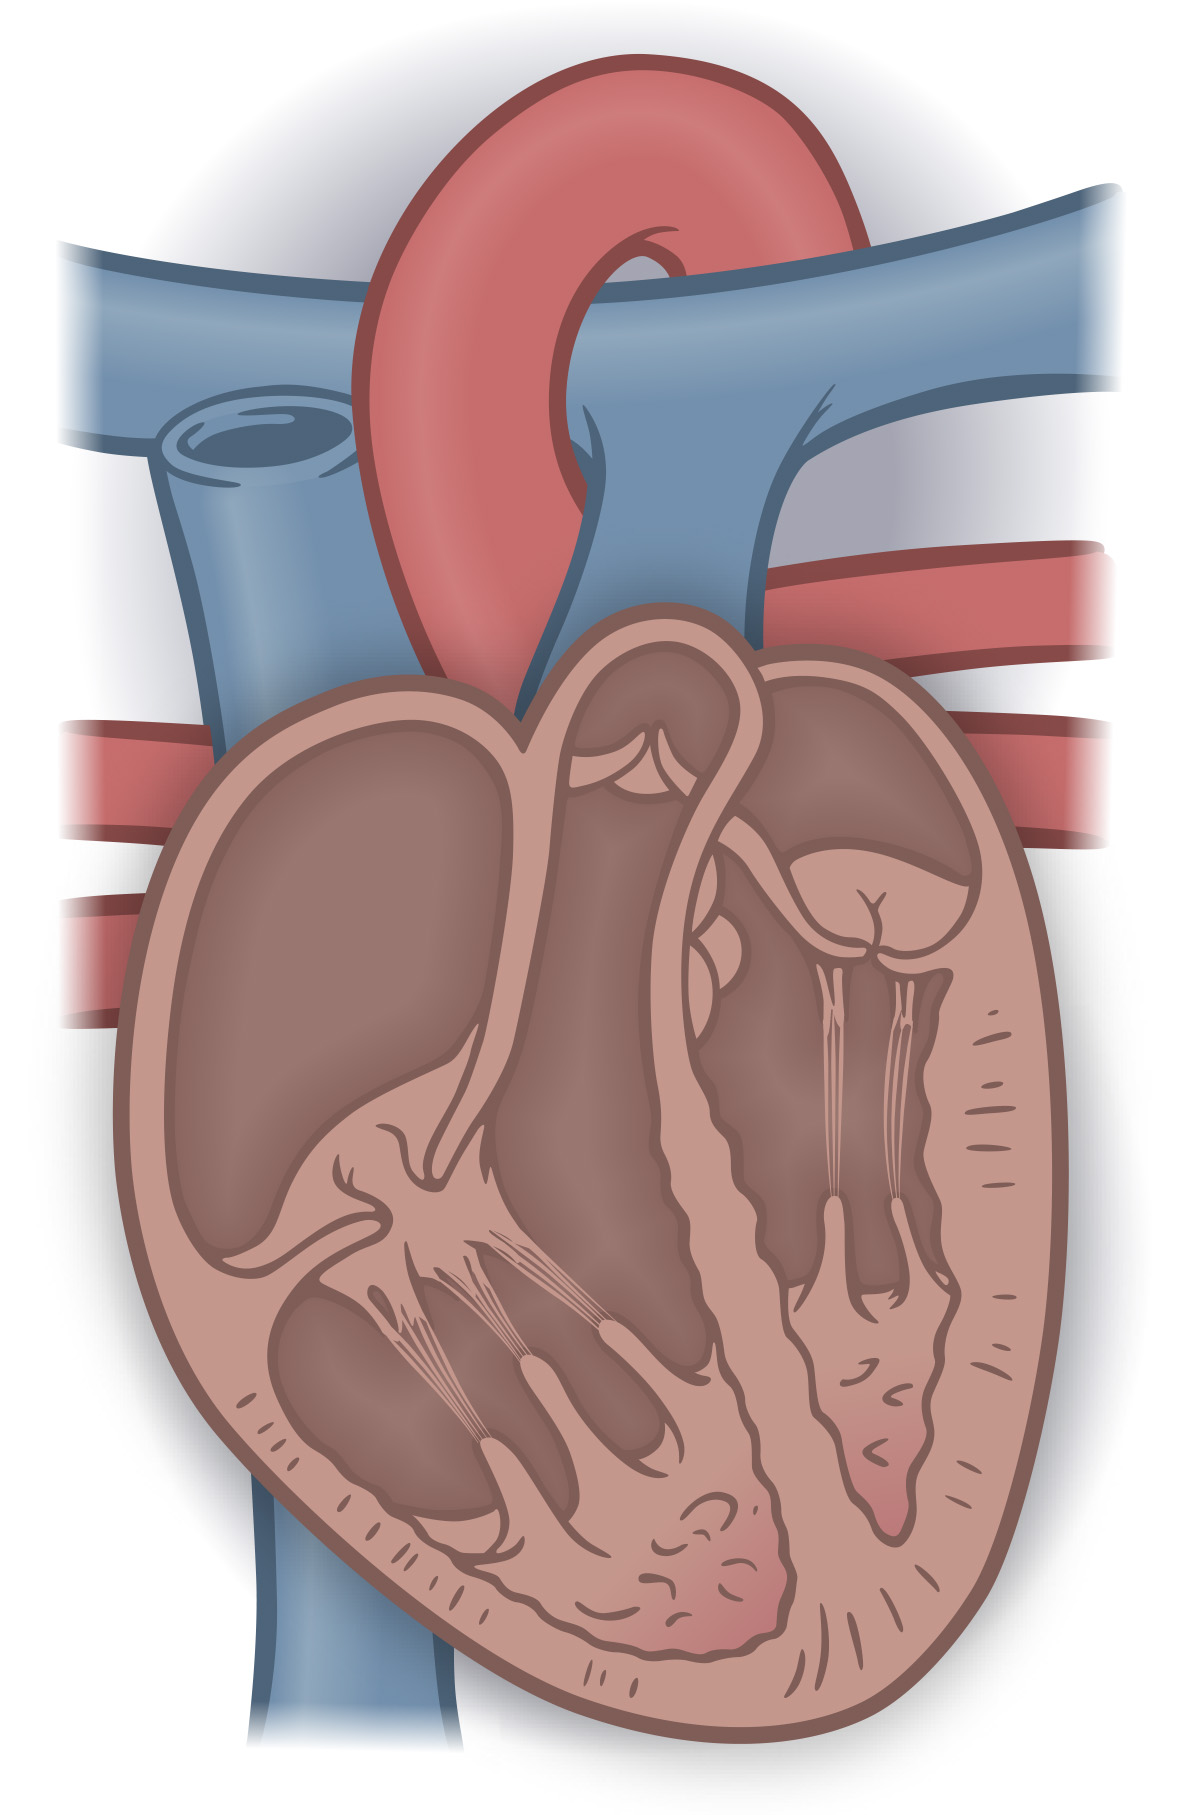 Human heart cross-section